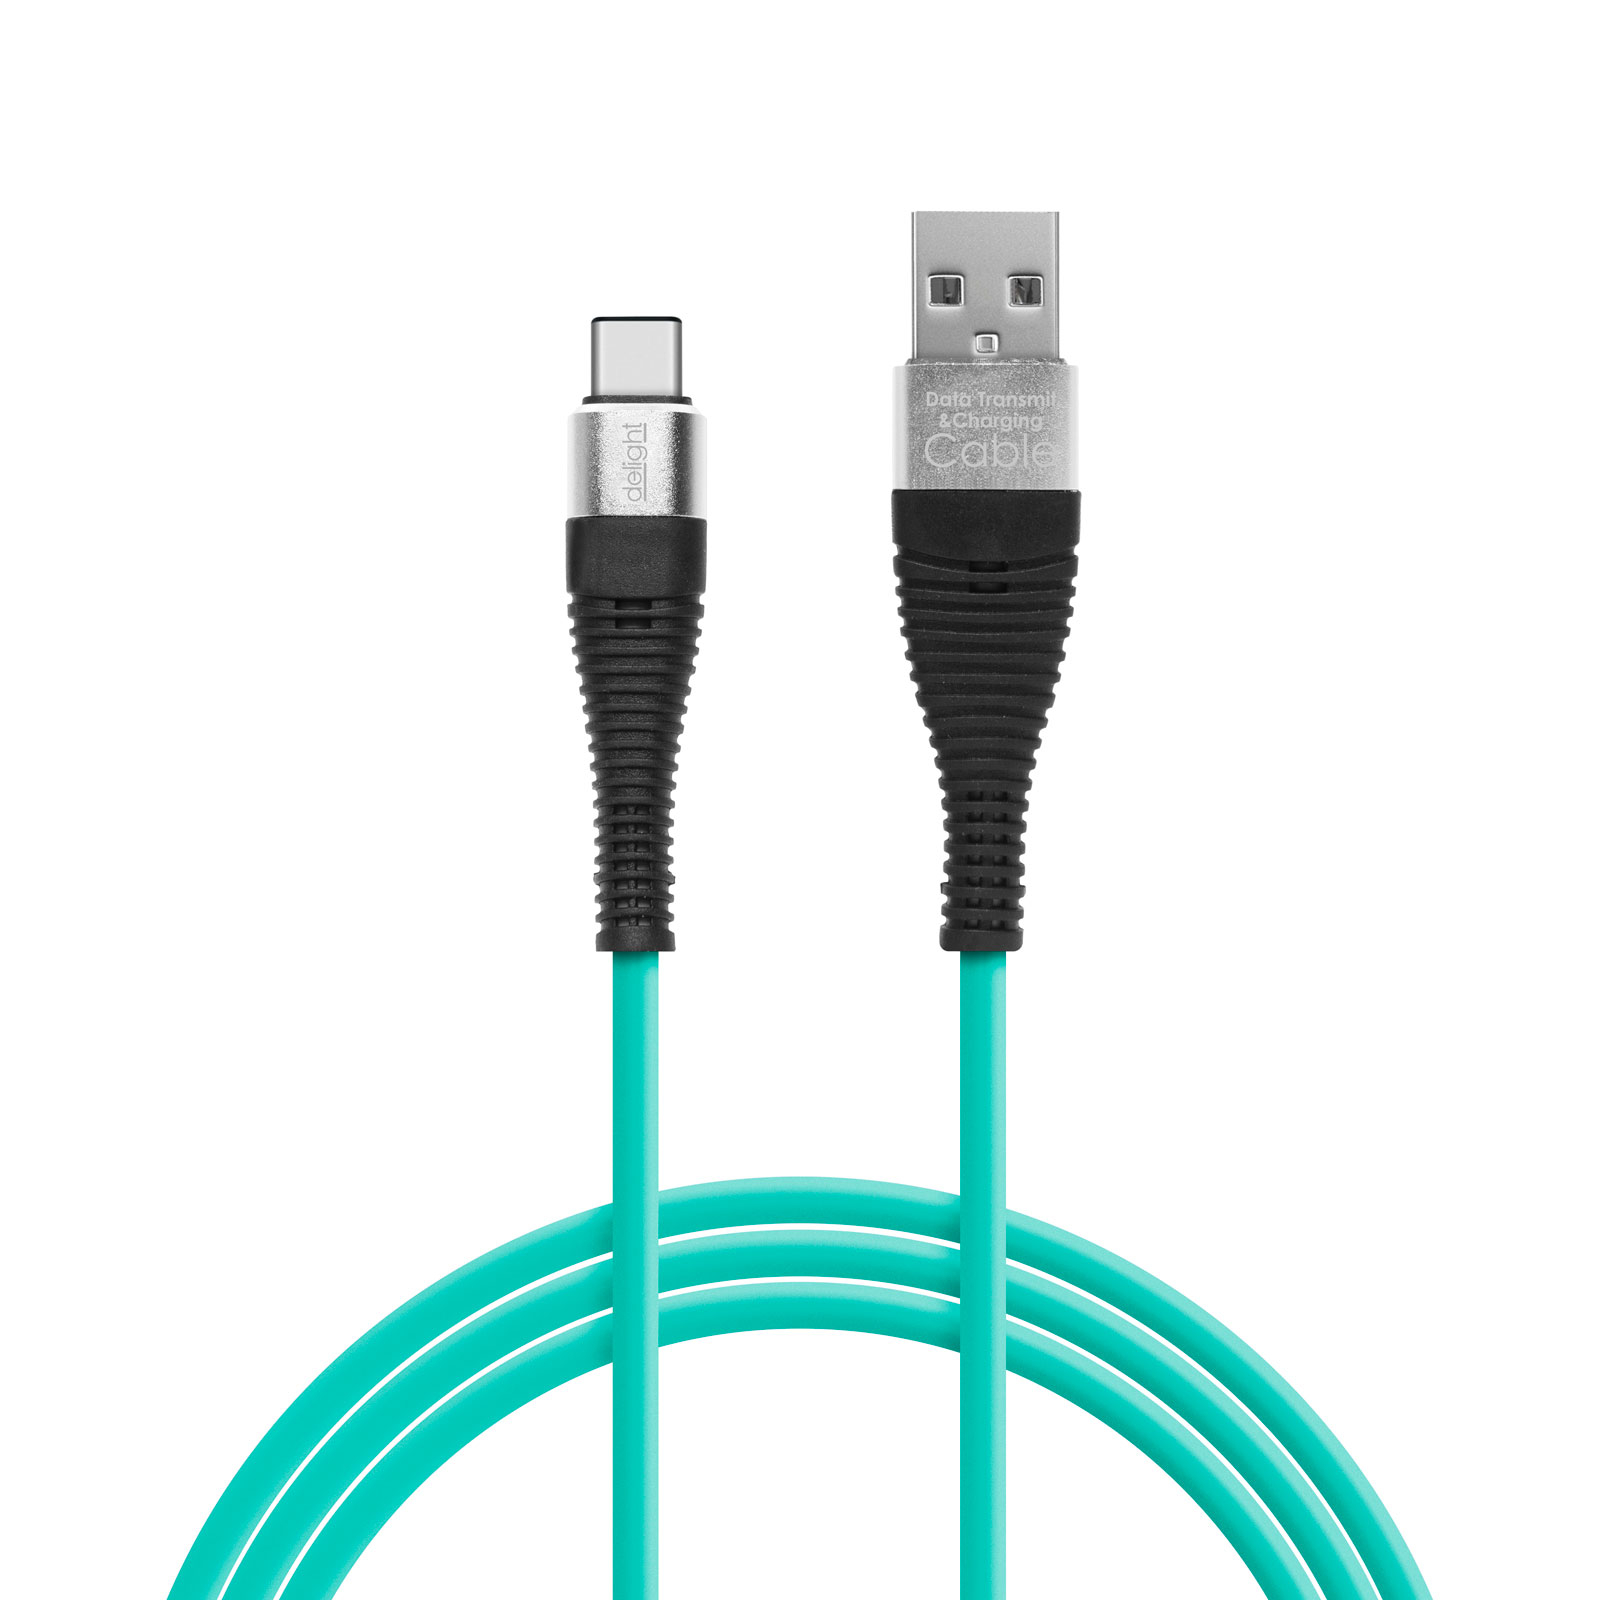 Delight - Cablu de date - USB Type C - invelis siliconic, 4 culori, 1 m